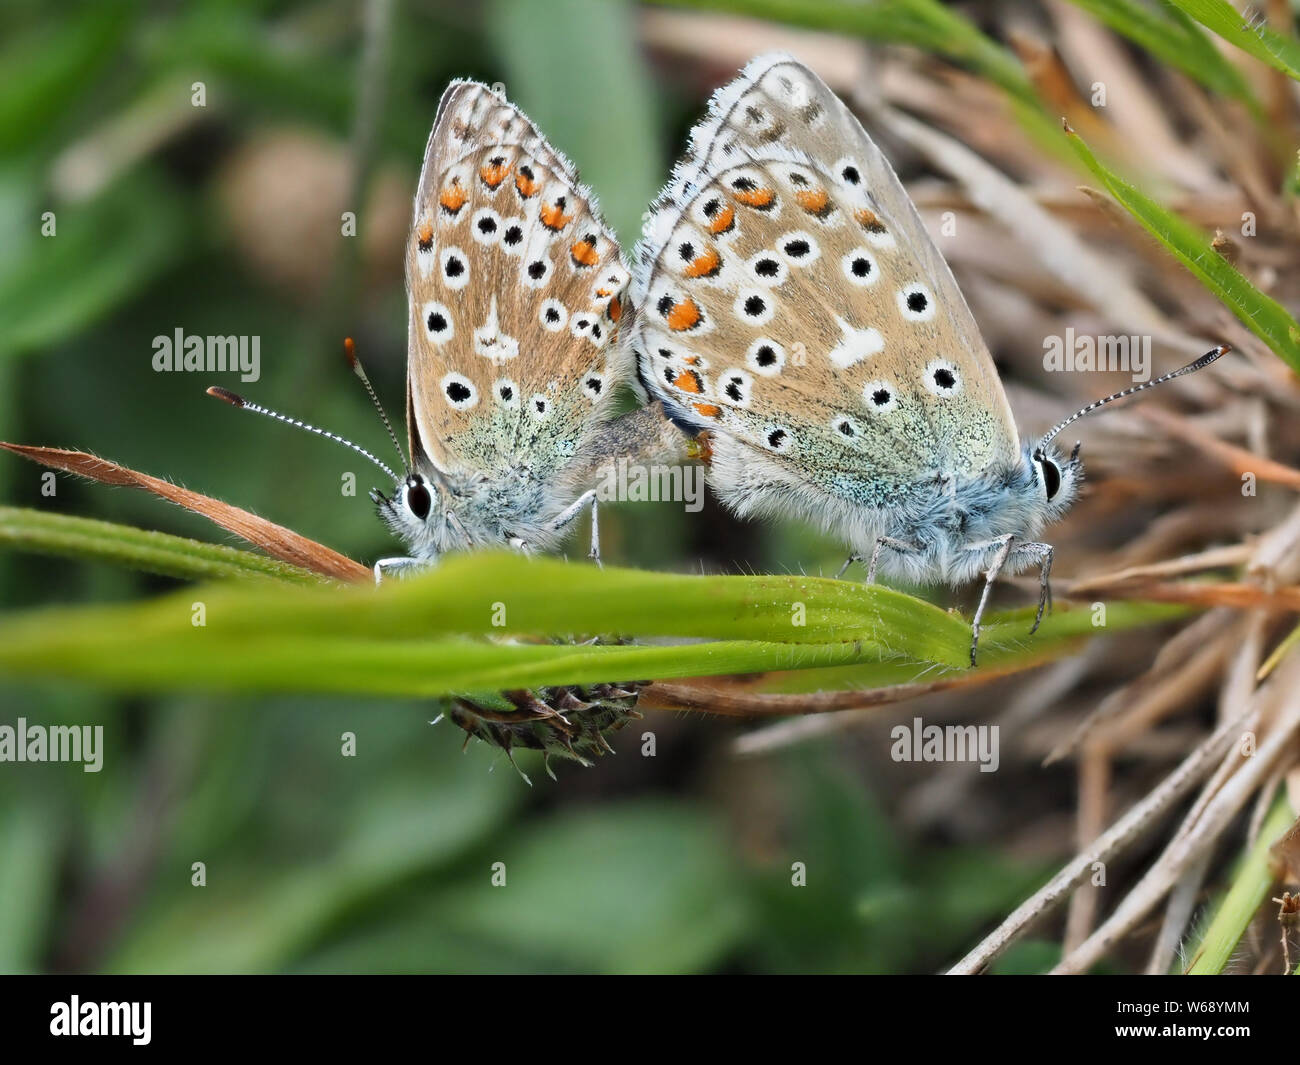 Adonis blu (Polyommatus bellargus) farfalle coniugata. Foto Stock